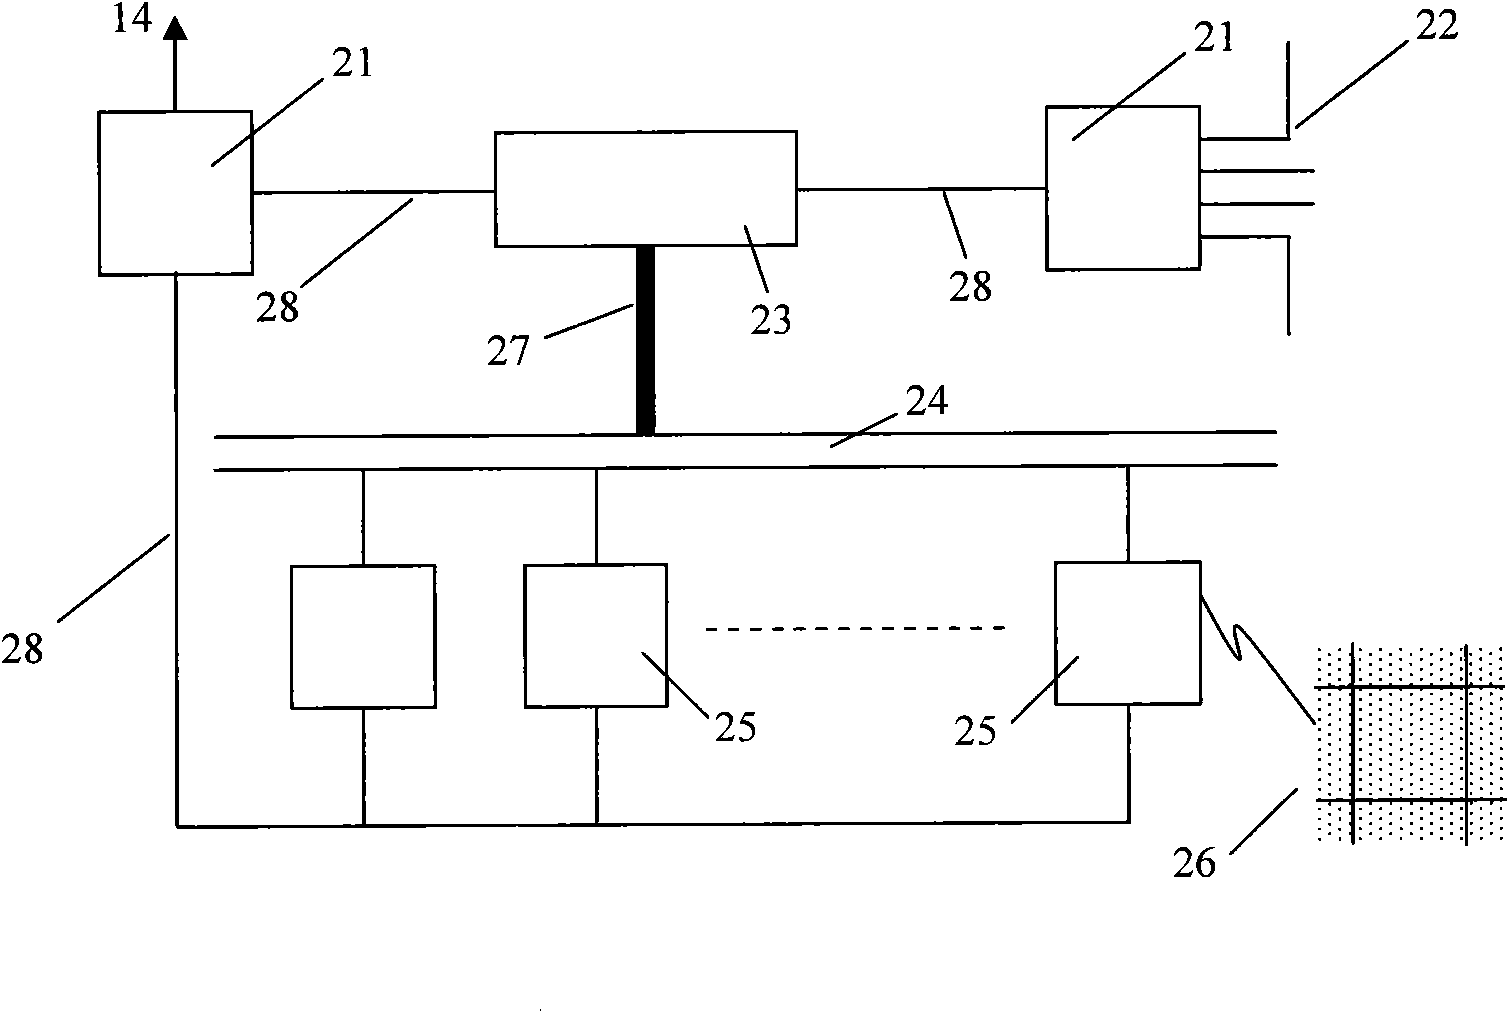 Concurrent computational system for multi-scale discrete simulation